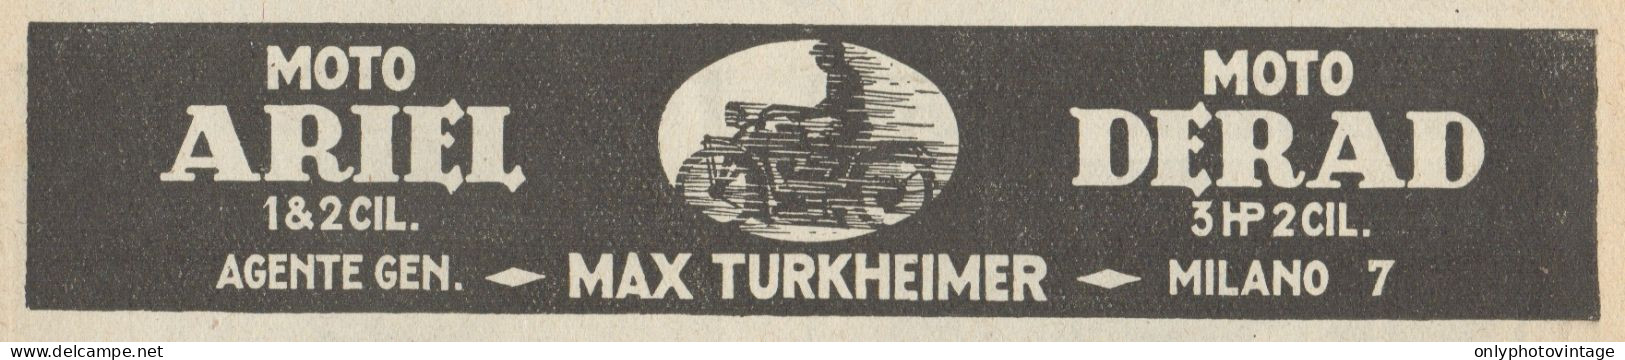 Moto ARIEL & DERAD - Pubblicità D'epoca - 1923 Old Advertising - Pubblicitari